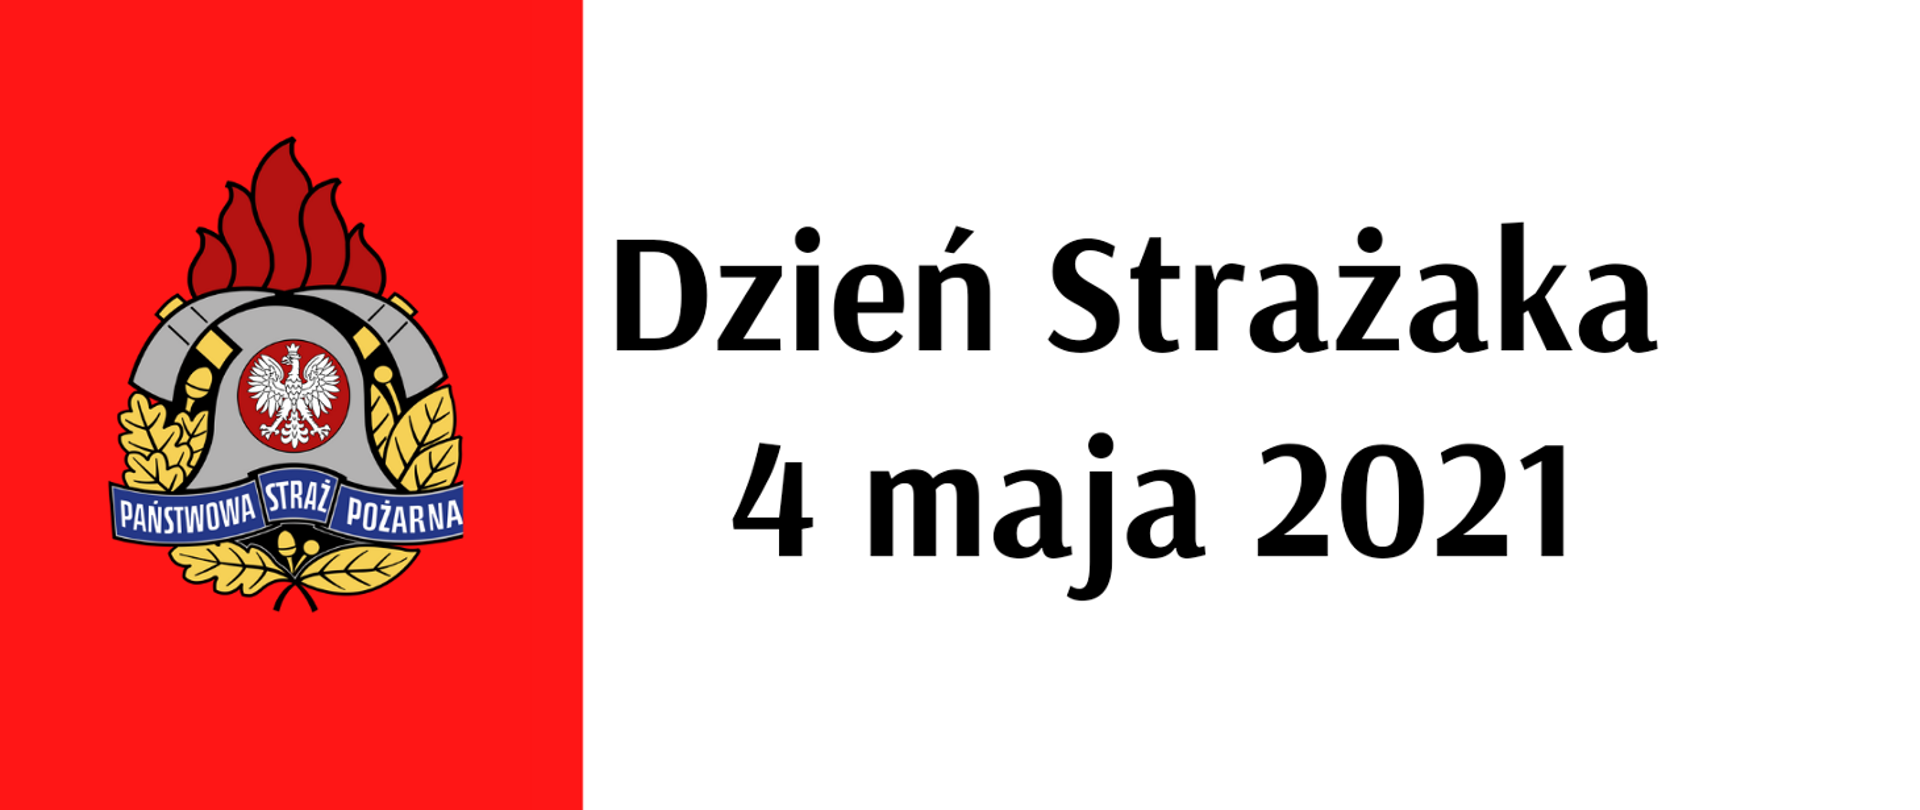 Po lewo logo PSP , po prawo napis Dzień Strażaka 4 maja 2021 r.